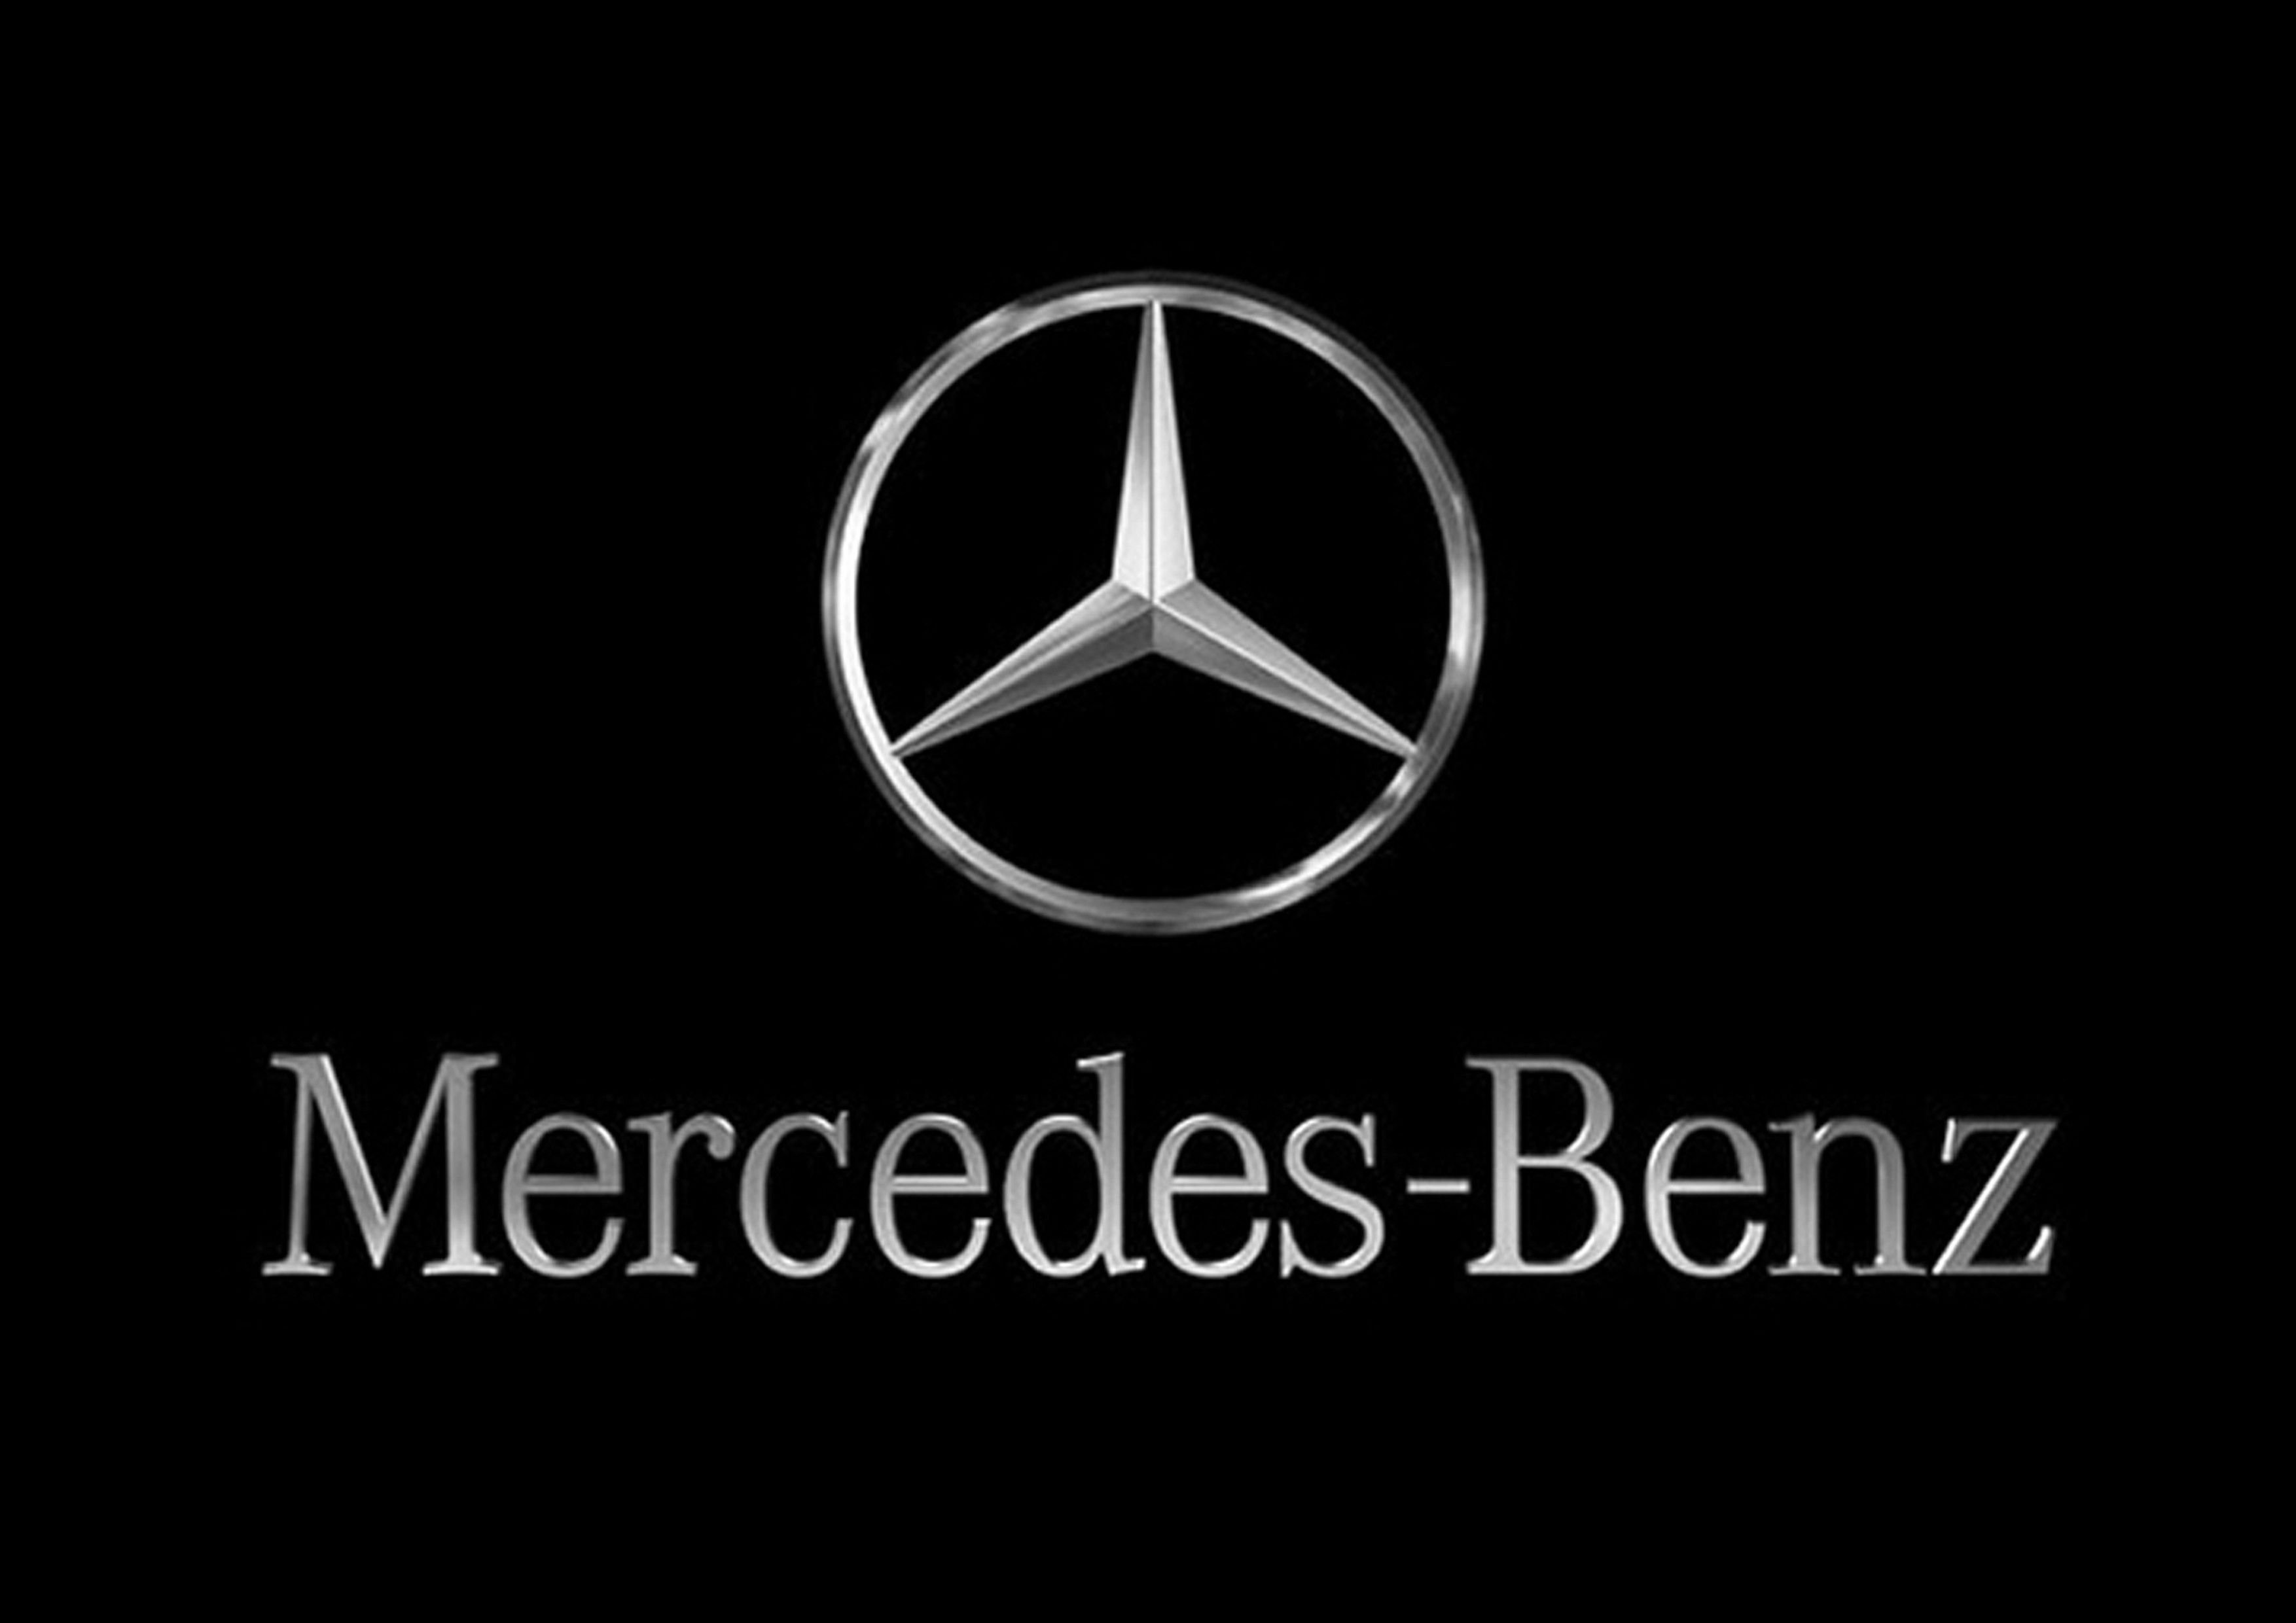 Mercedes-Benz 230 Ce Wallpapers